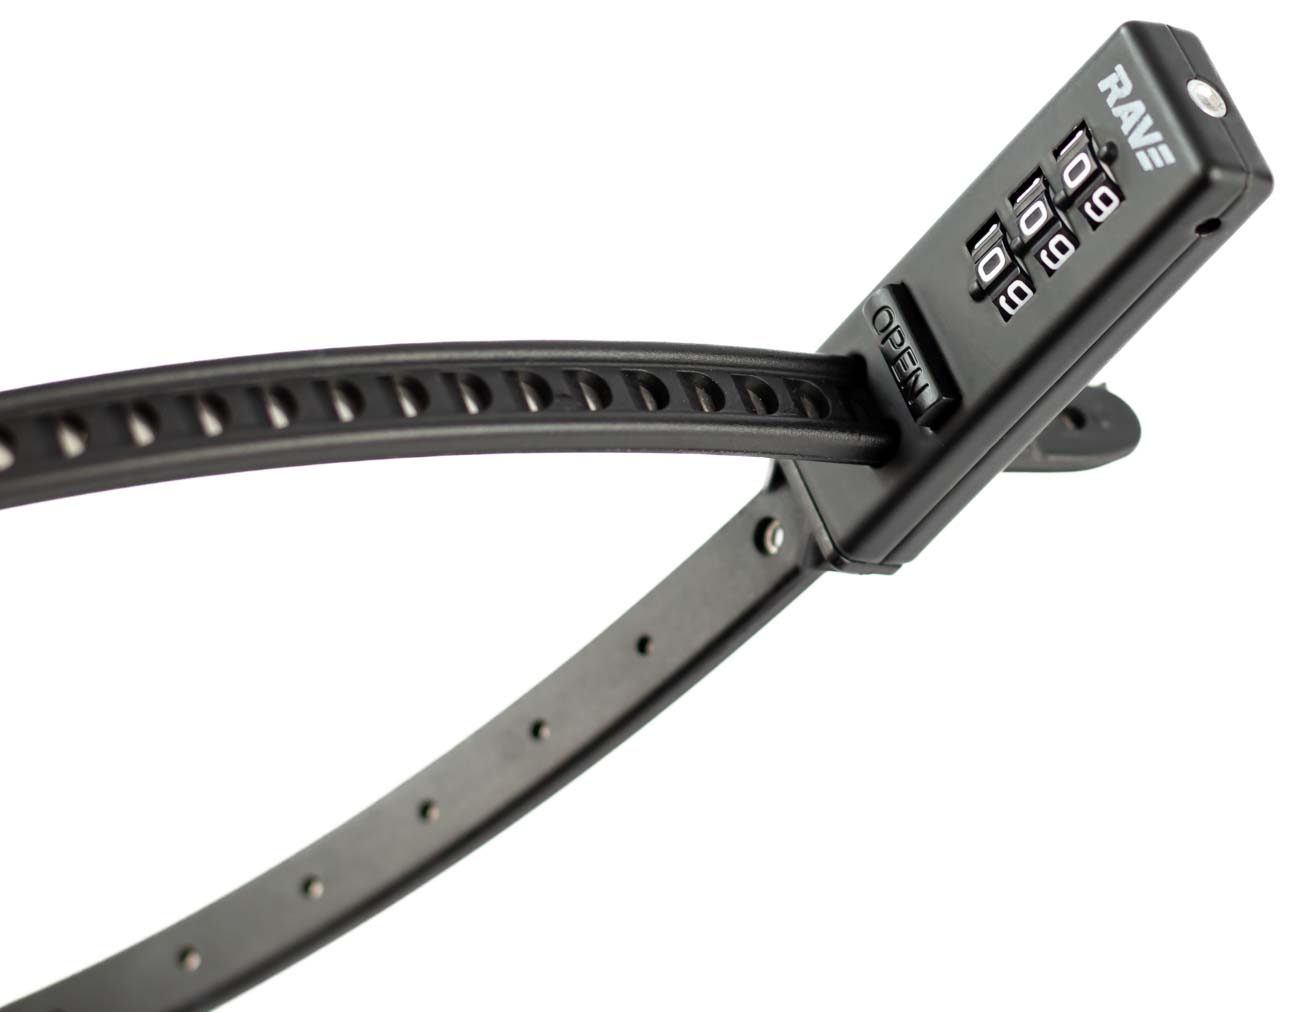 rave cable tie lock / multifunction lock - 50 cm / 100 g